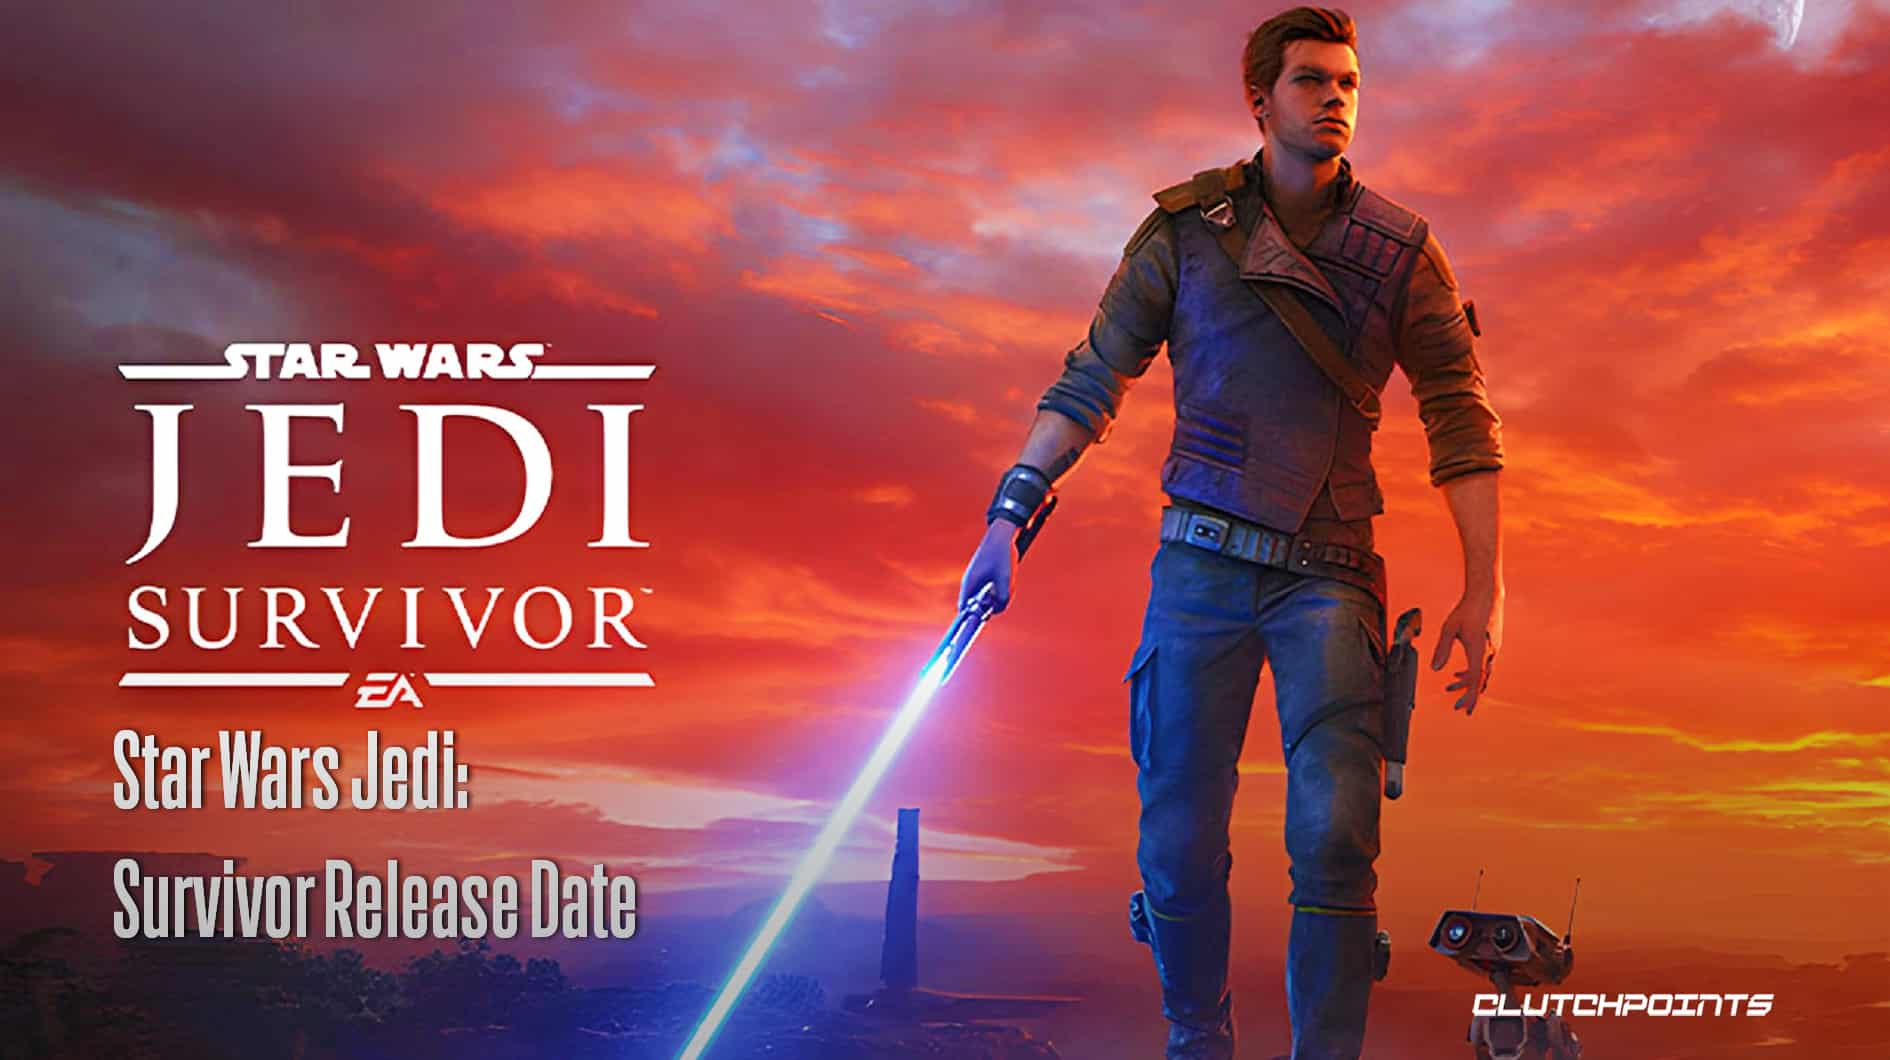 Star Wars Jedi Survivor Release Date, Story, InGame Features